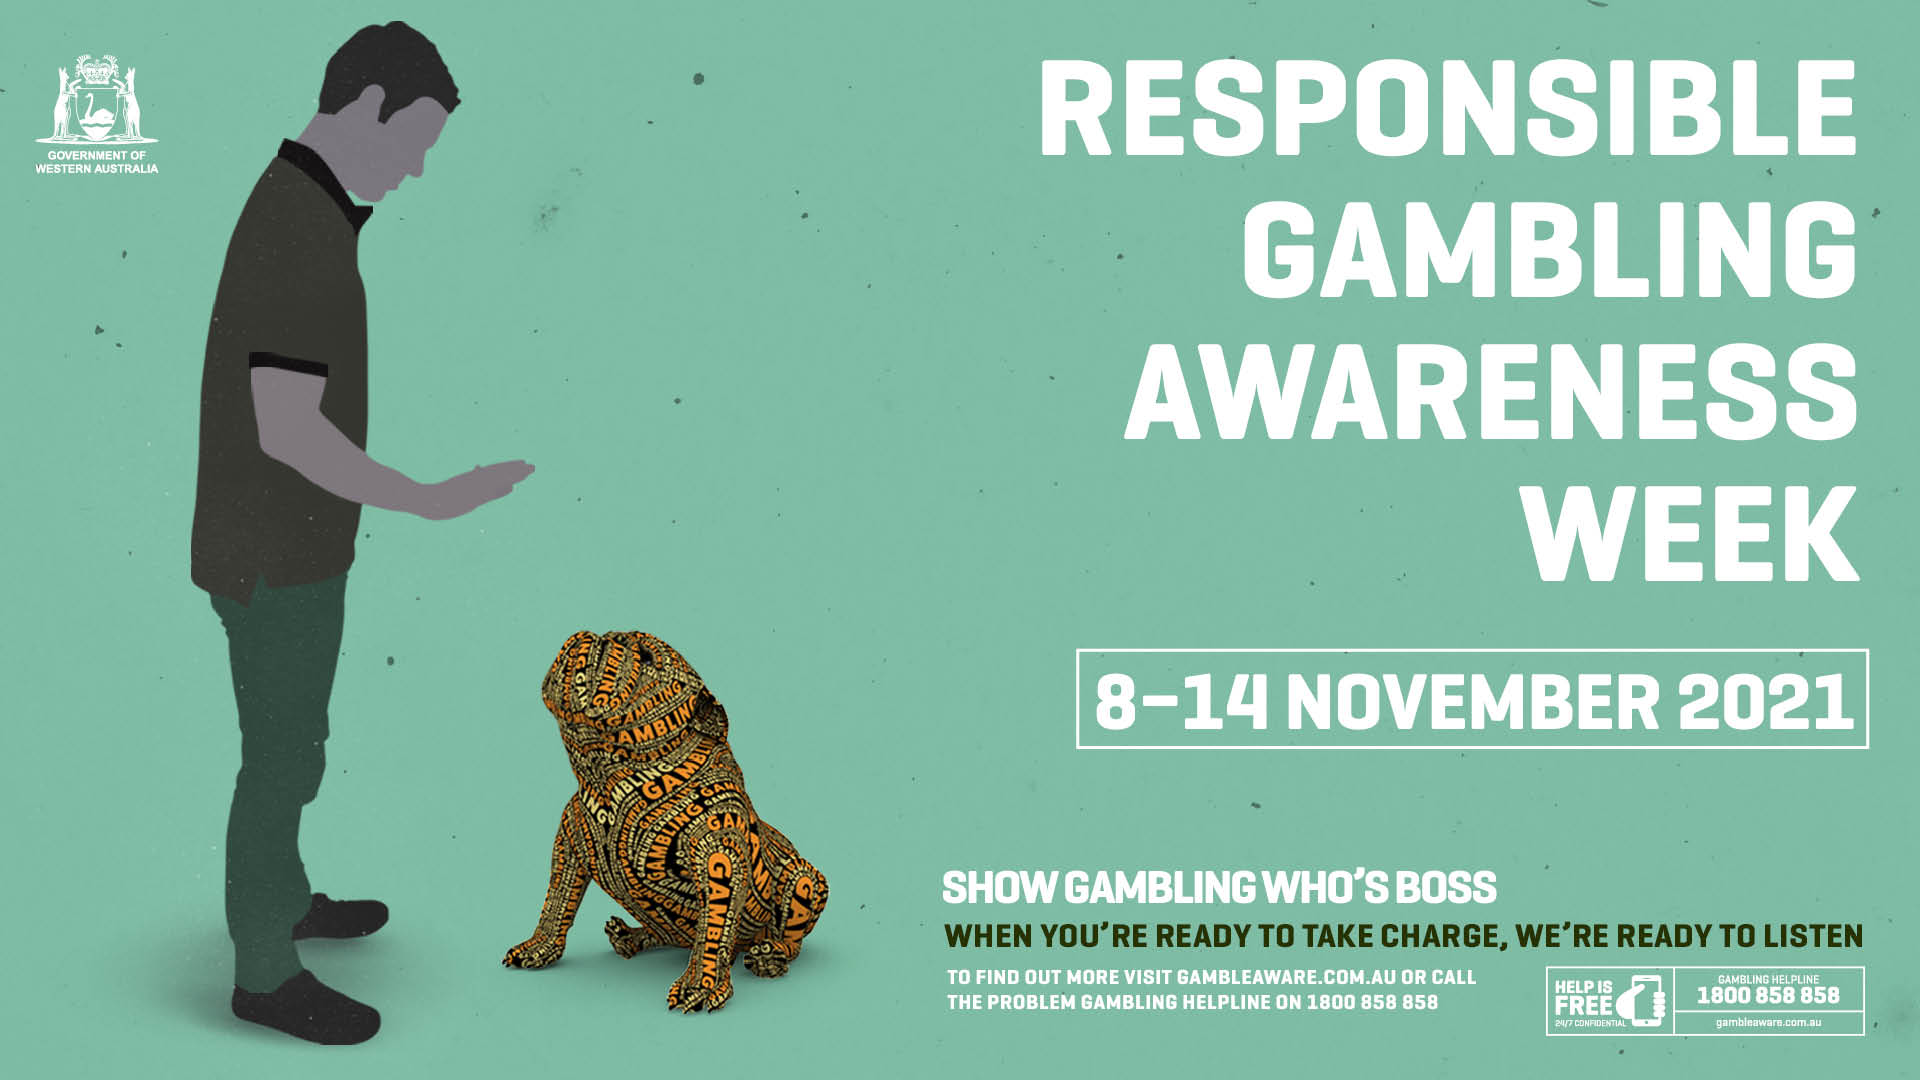 Responsible Gambling Awareness Week showing an illustration of a man and a dog